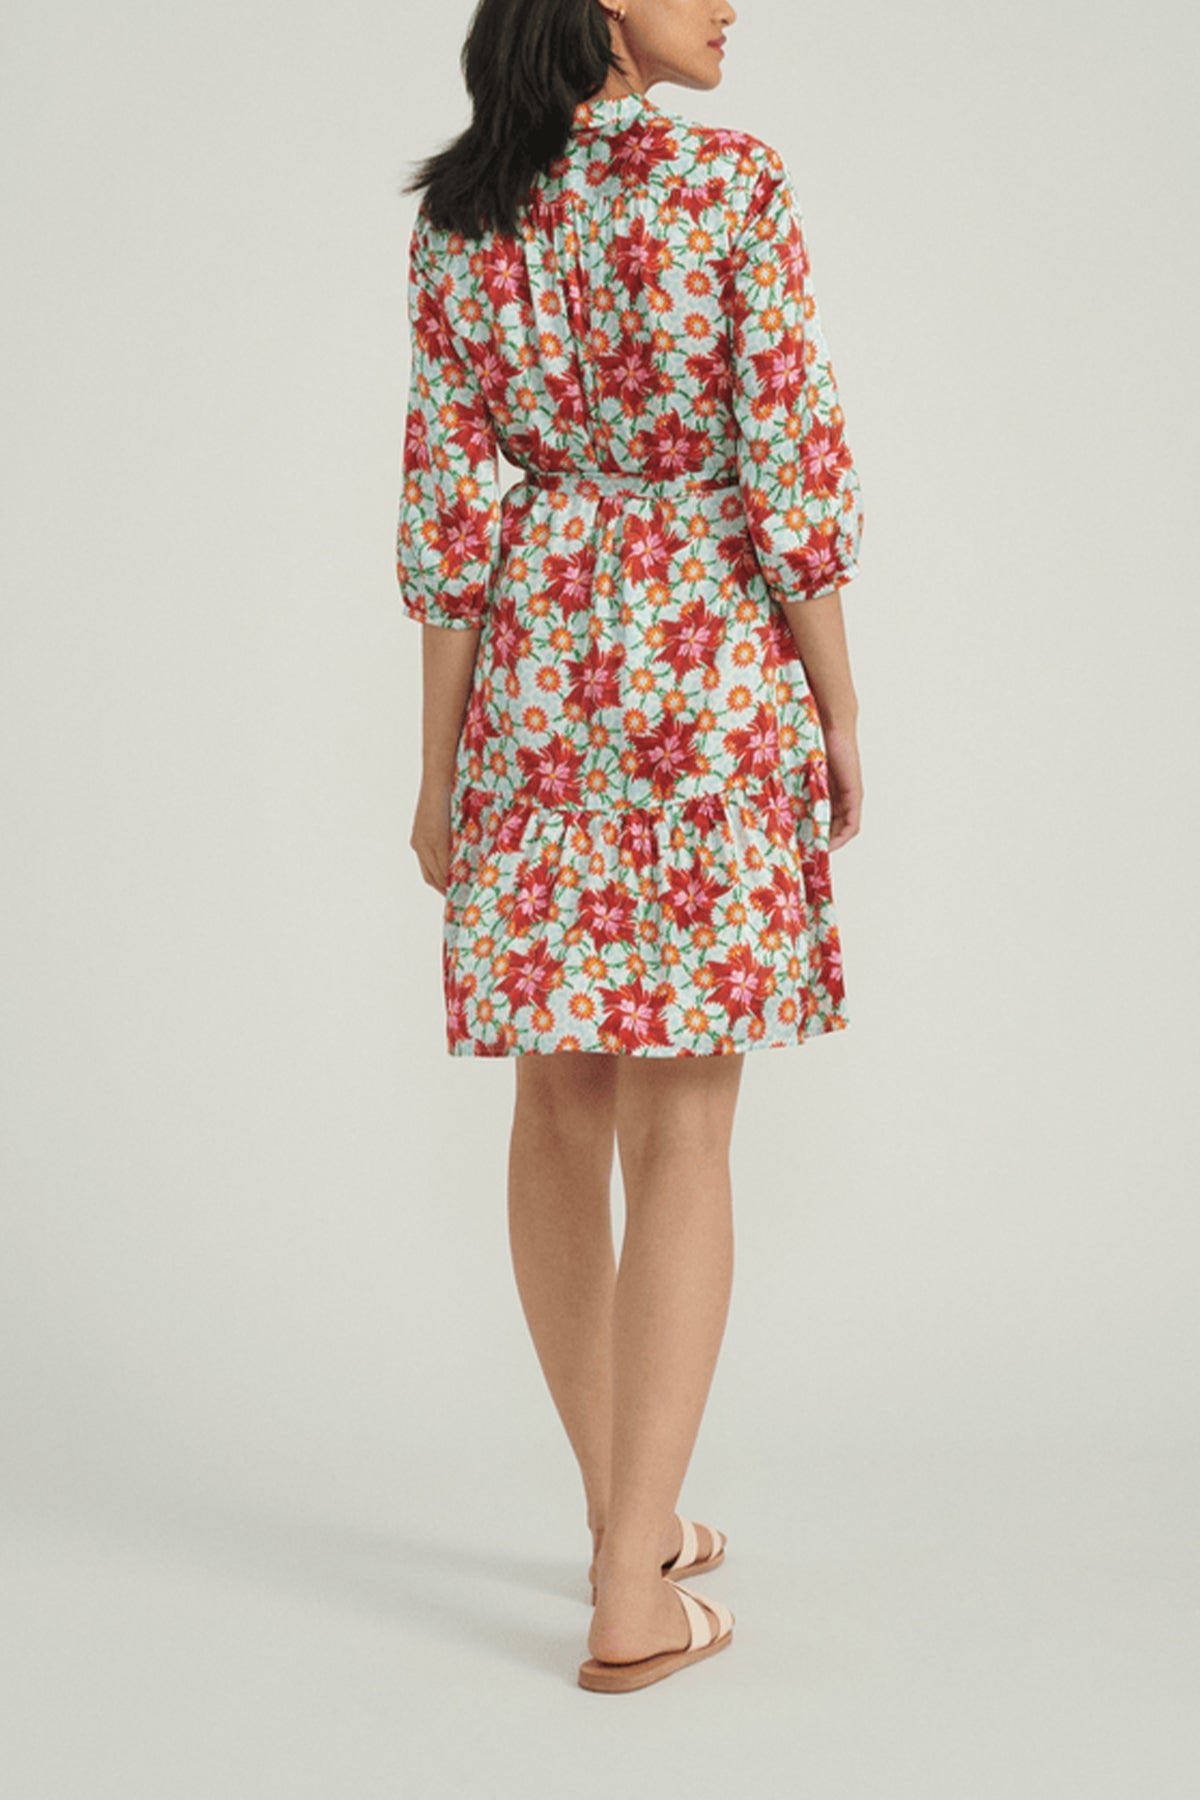 Tyra Dress in Stargazer - shop-olivia.com